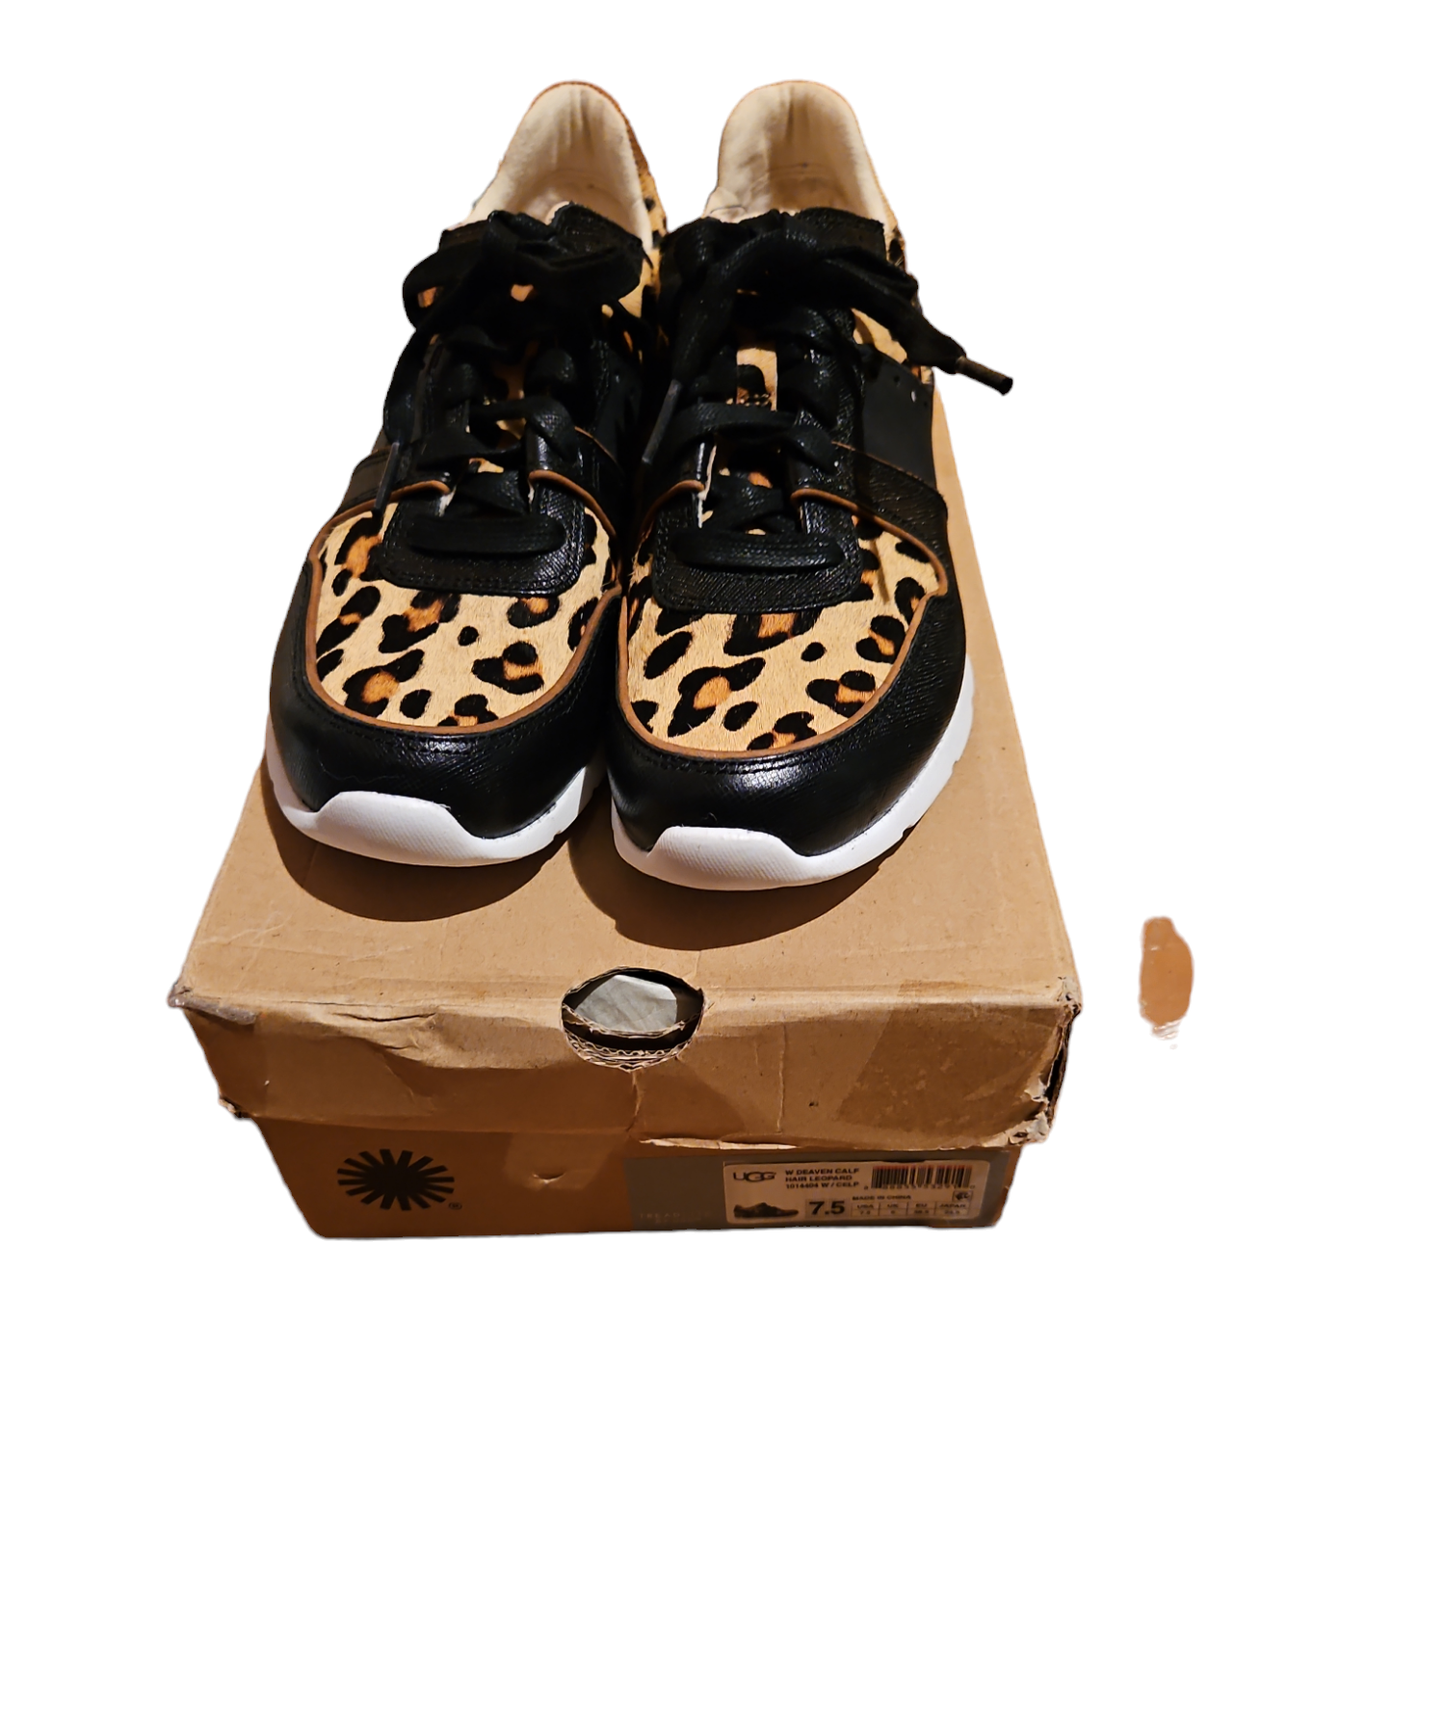 Ugg Australia Deaven Calf Hair Leopard Sneakers Sz 7.5